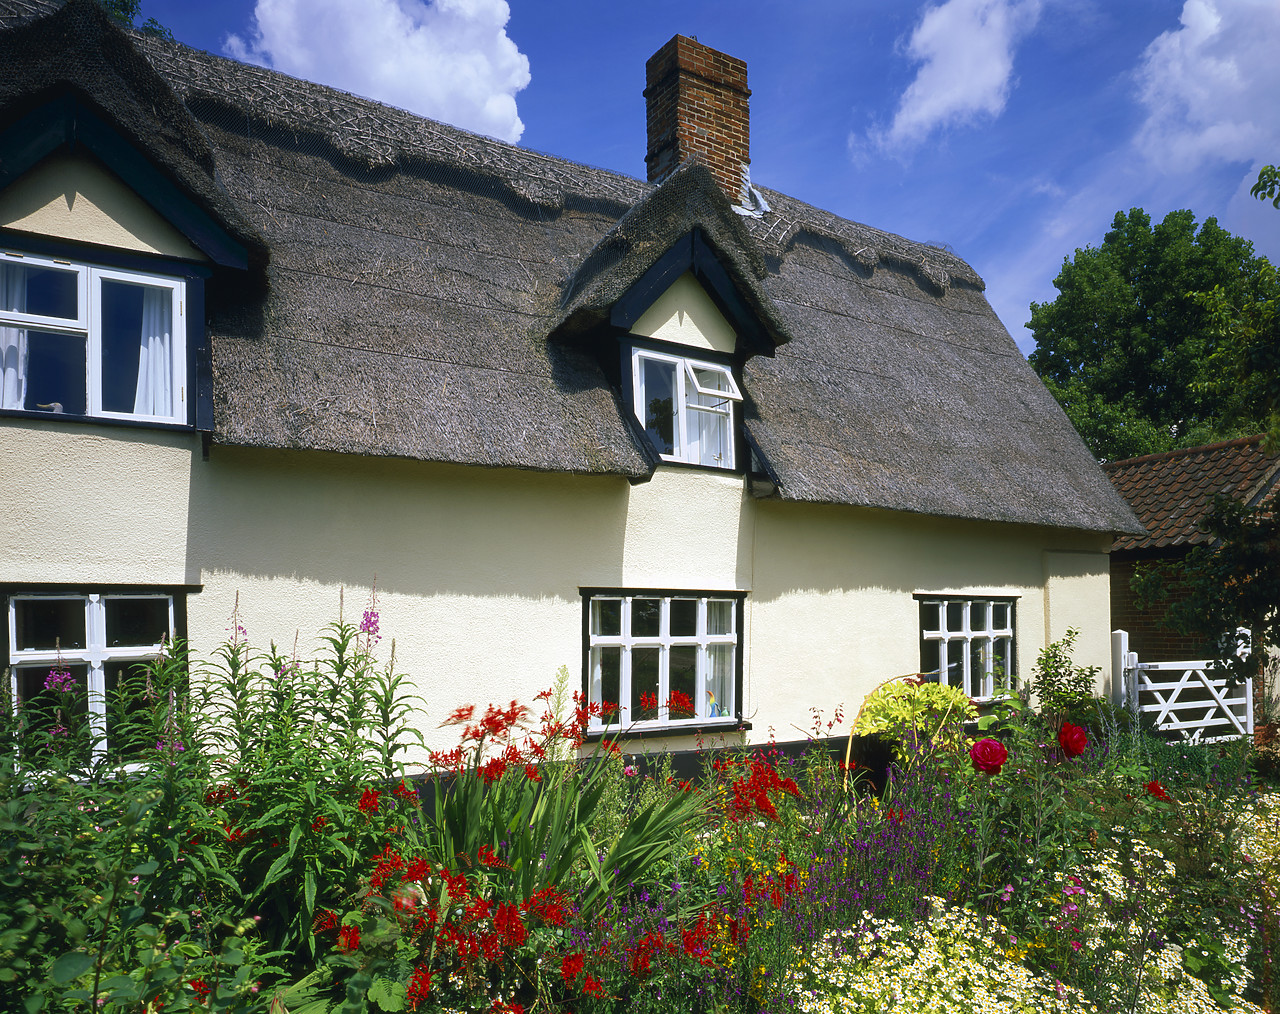 #070248-1 - Thatched Cottage & Garden, Lundy Green, Norfolk, England